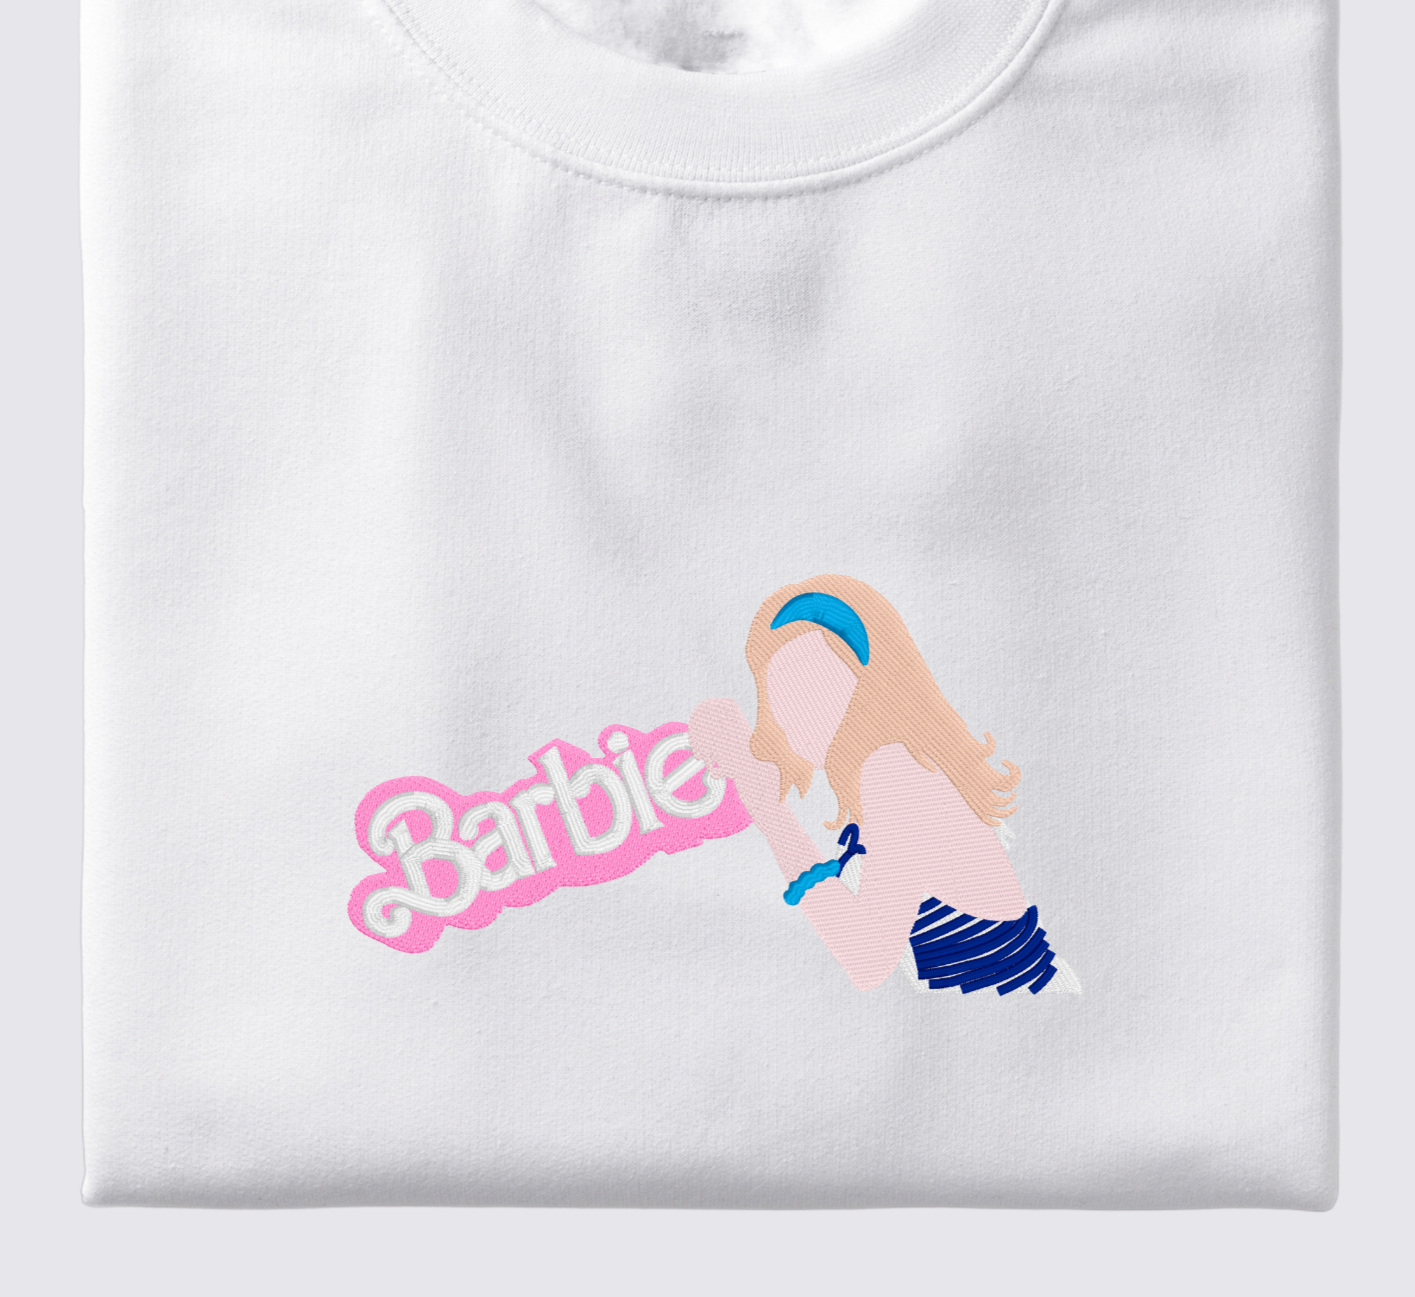 Little Girls Barbie Graphic Sweatshirt and Leggings - White